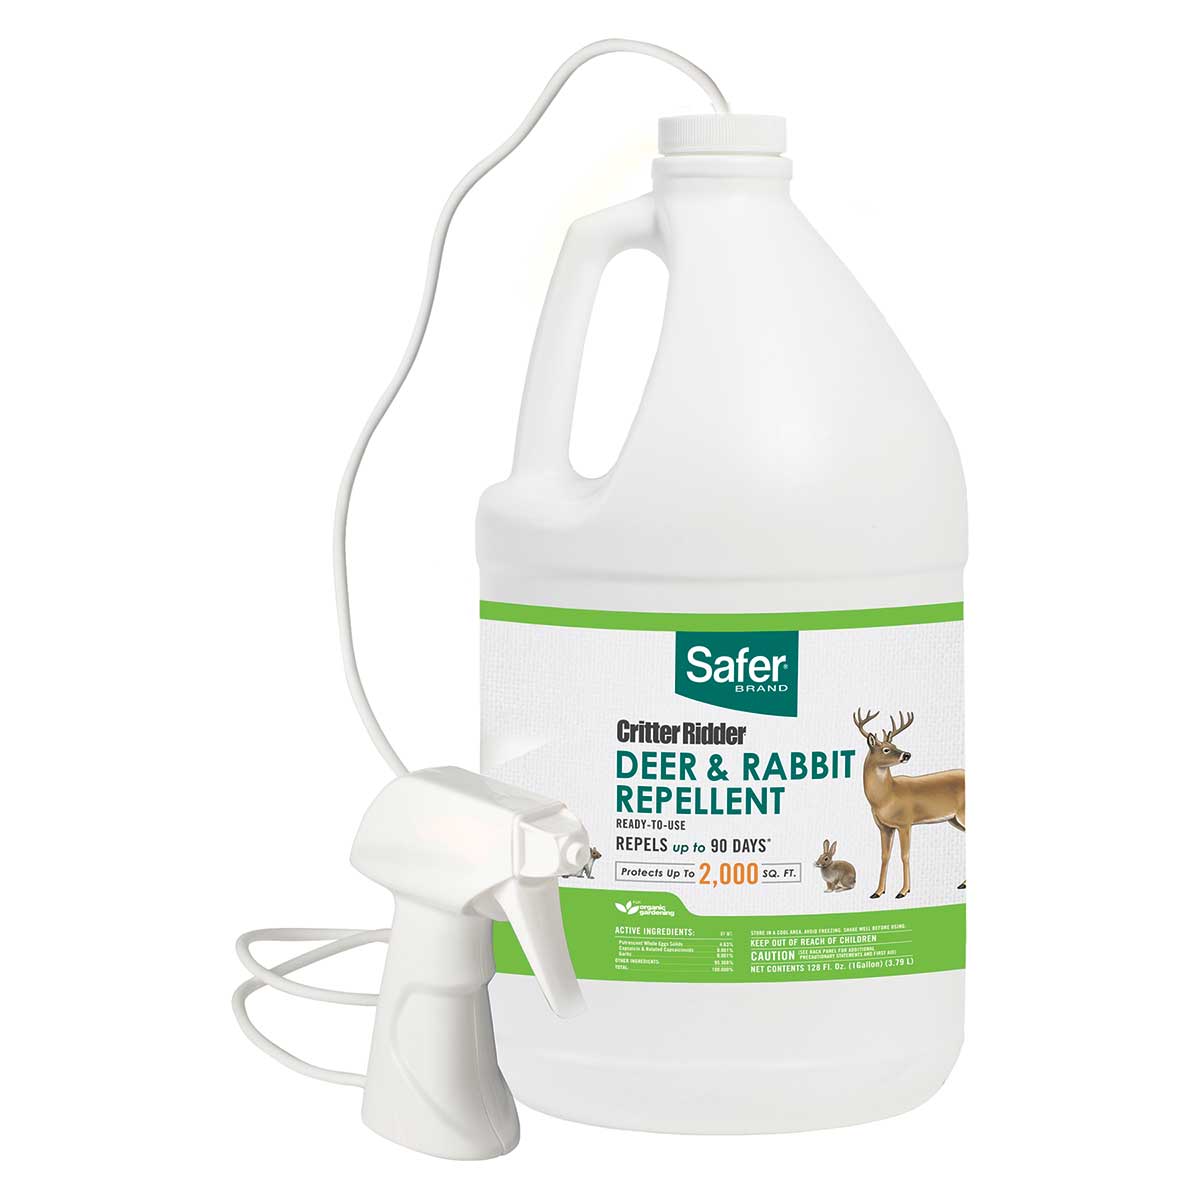 Safer Brand Critter Ridder Deer & Rabbit Repellent Ready-To-Use